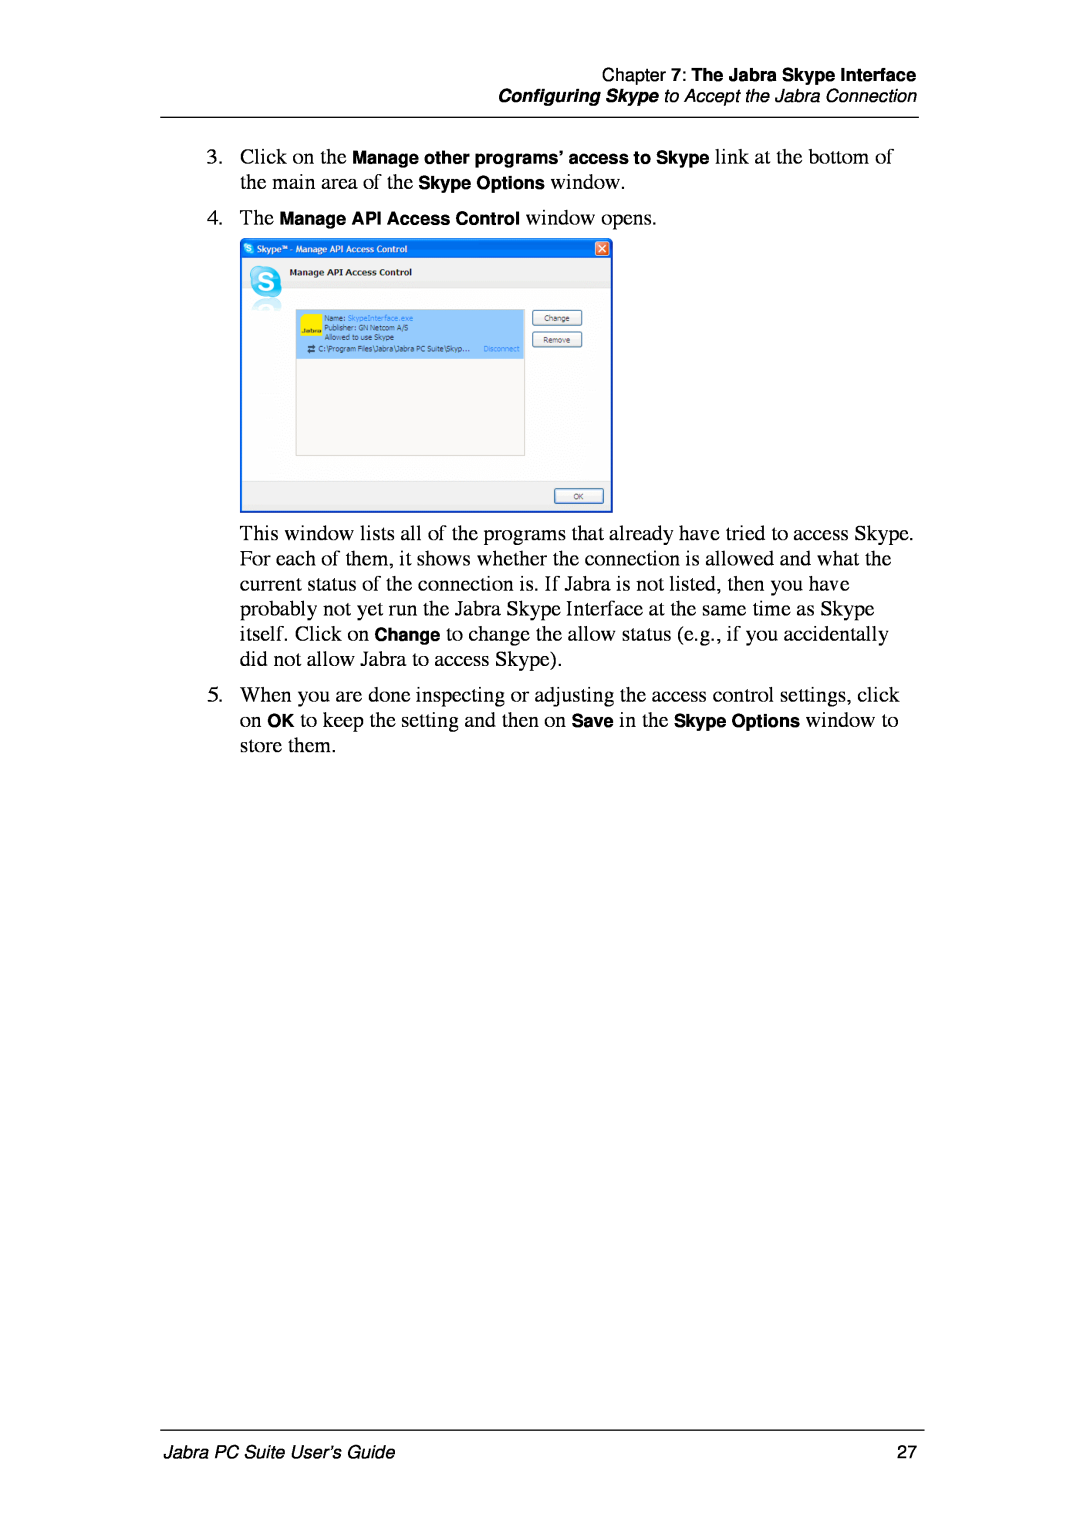 Jabra PC Suite manual the main area of the Skype Options window 